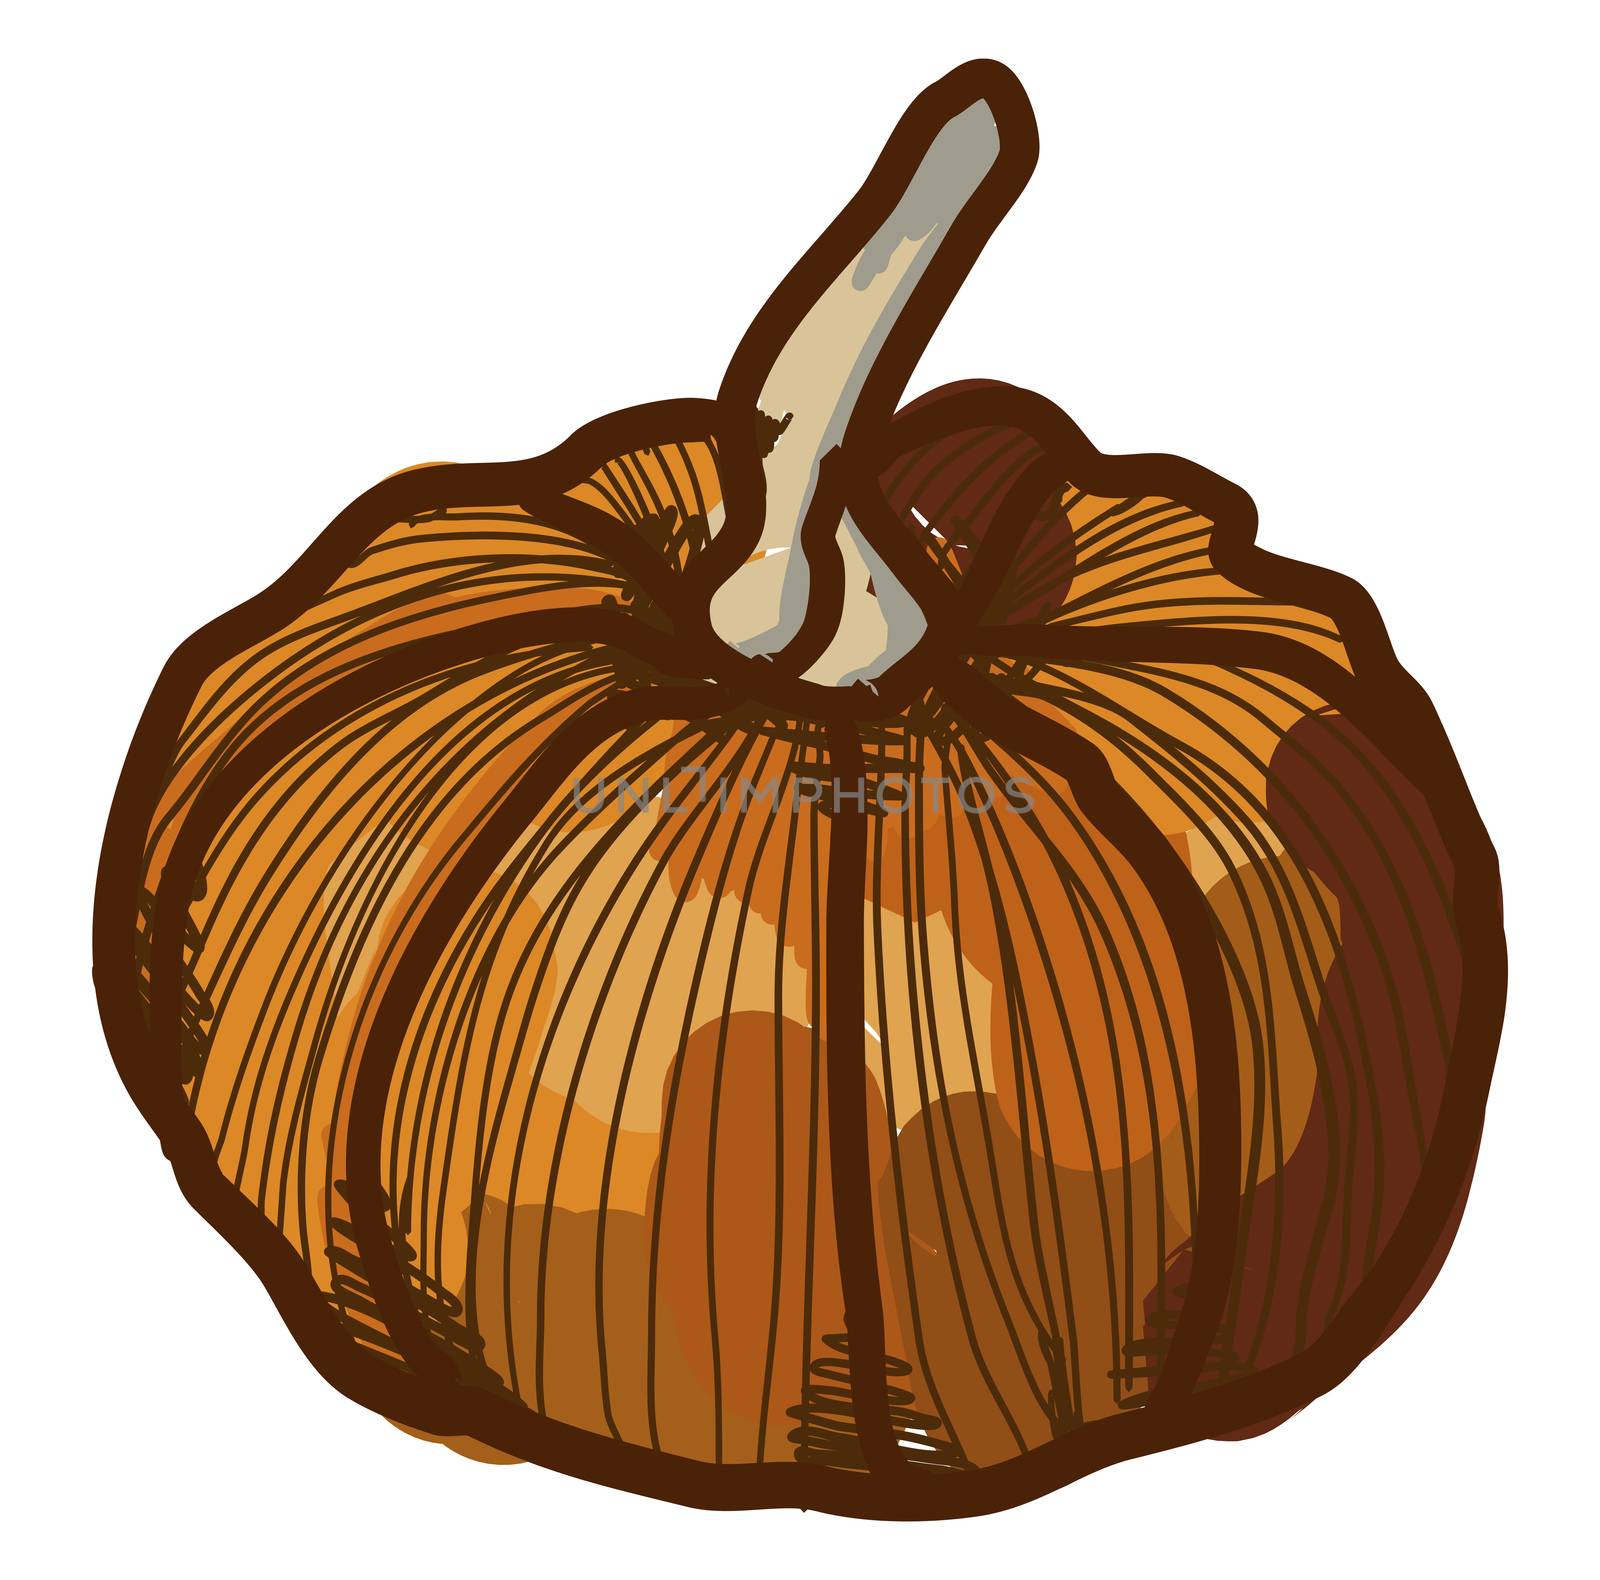 Mini pumpkin, illustration, vector on white background